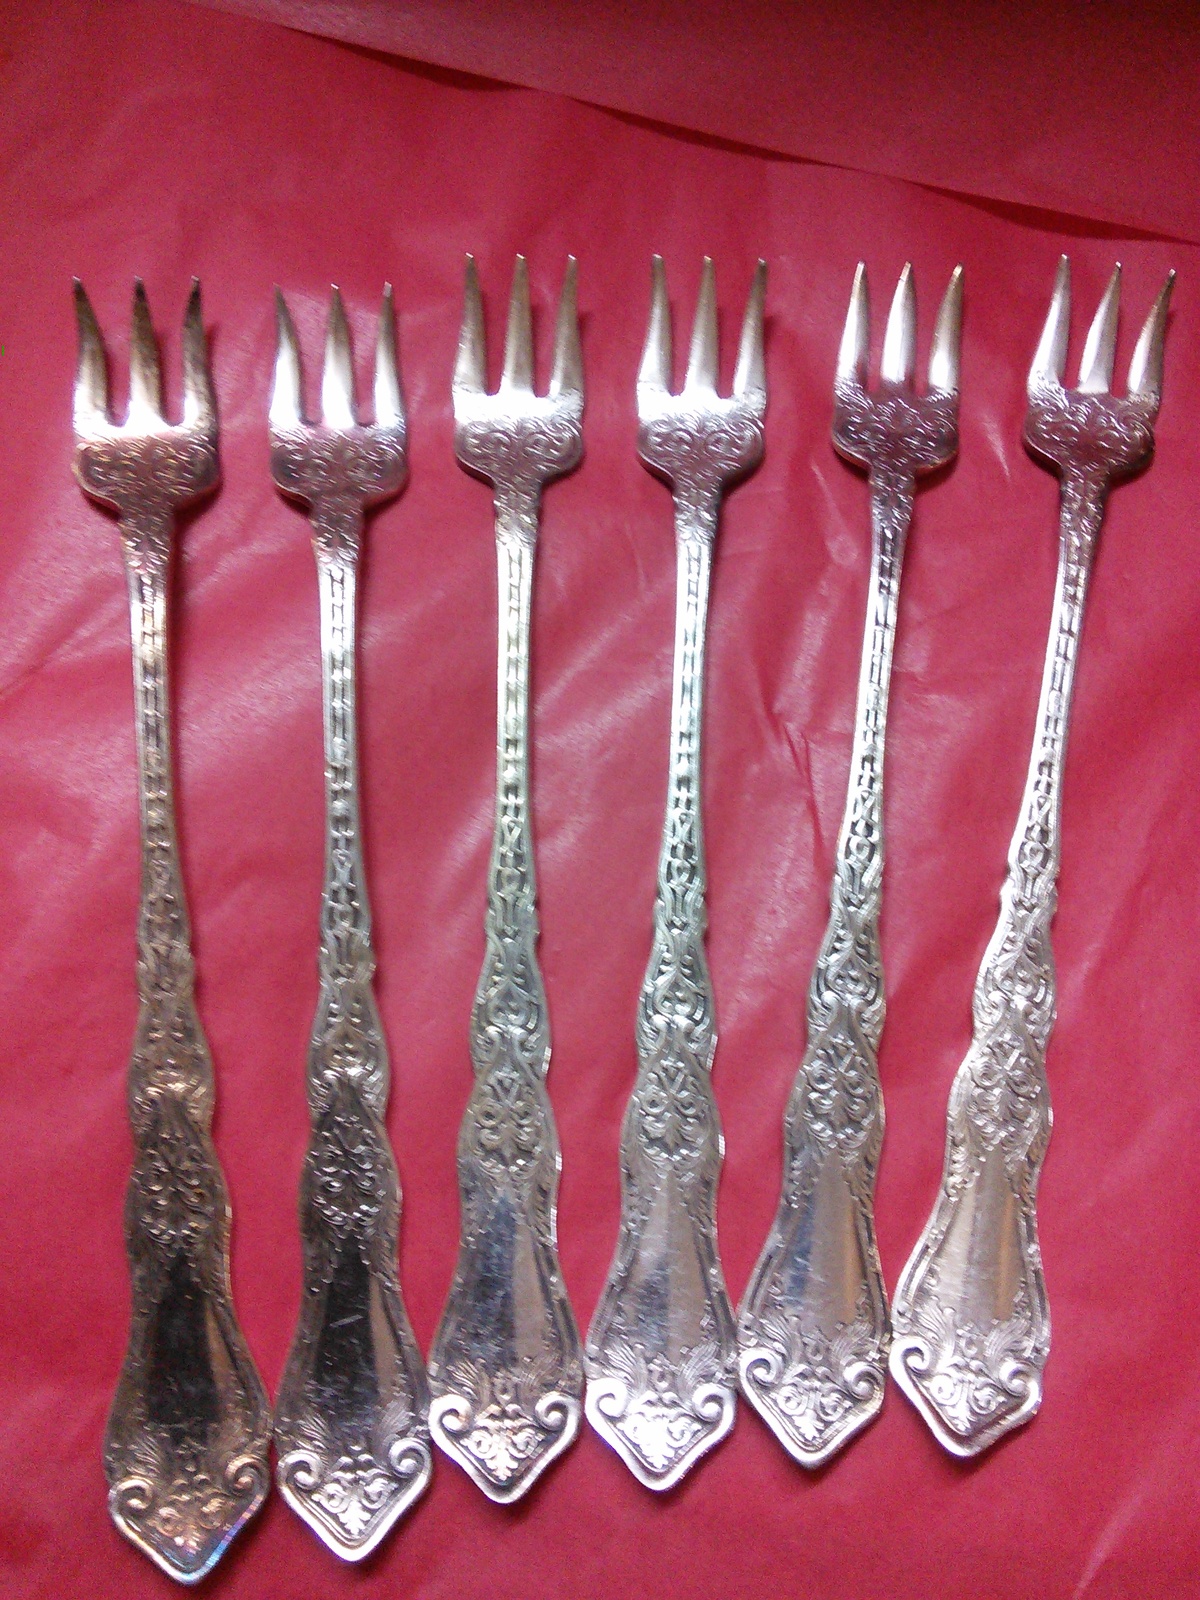 Primary image for Rogers Alhambra Oyster Forks 1907 set of 6